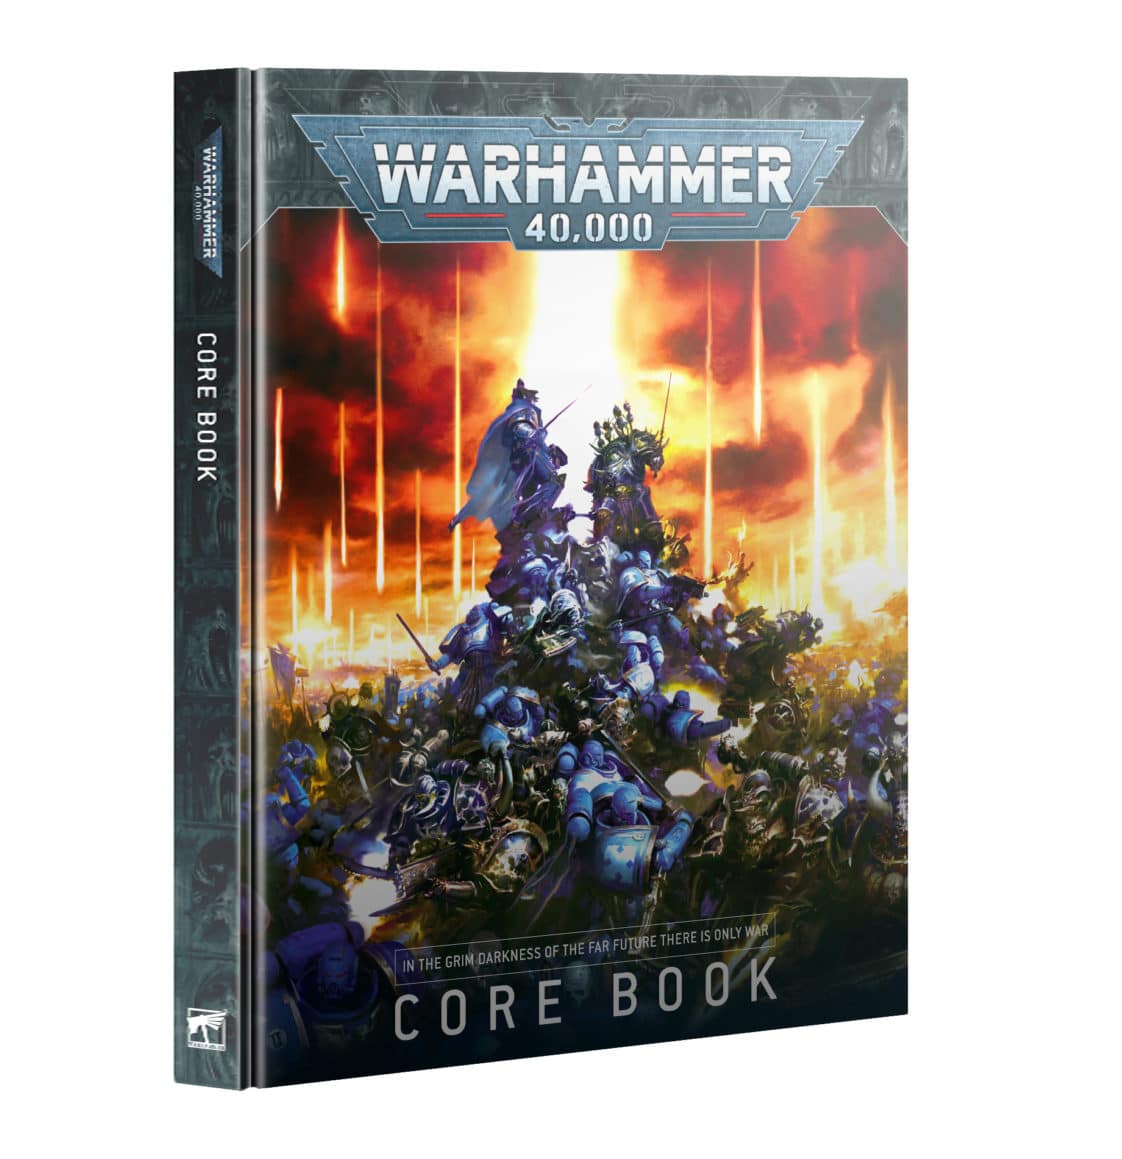 Warhammer 40,000: 10th Ed. Core Book (English)